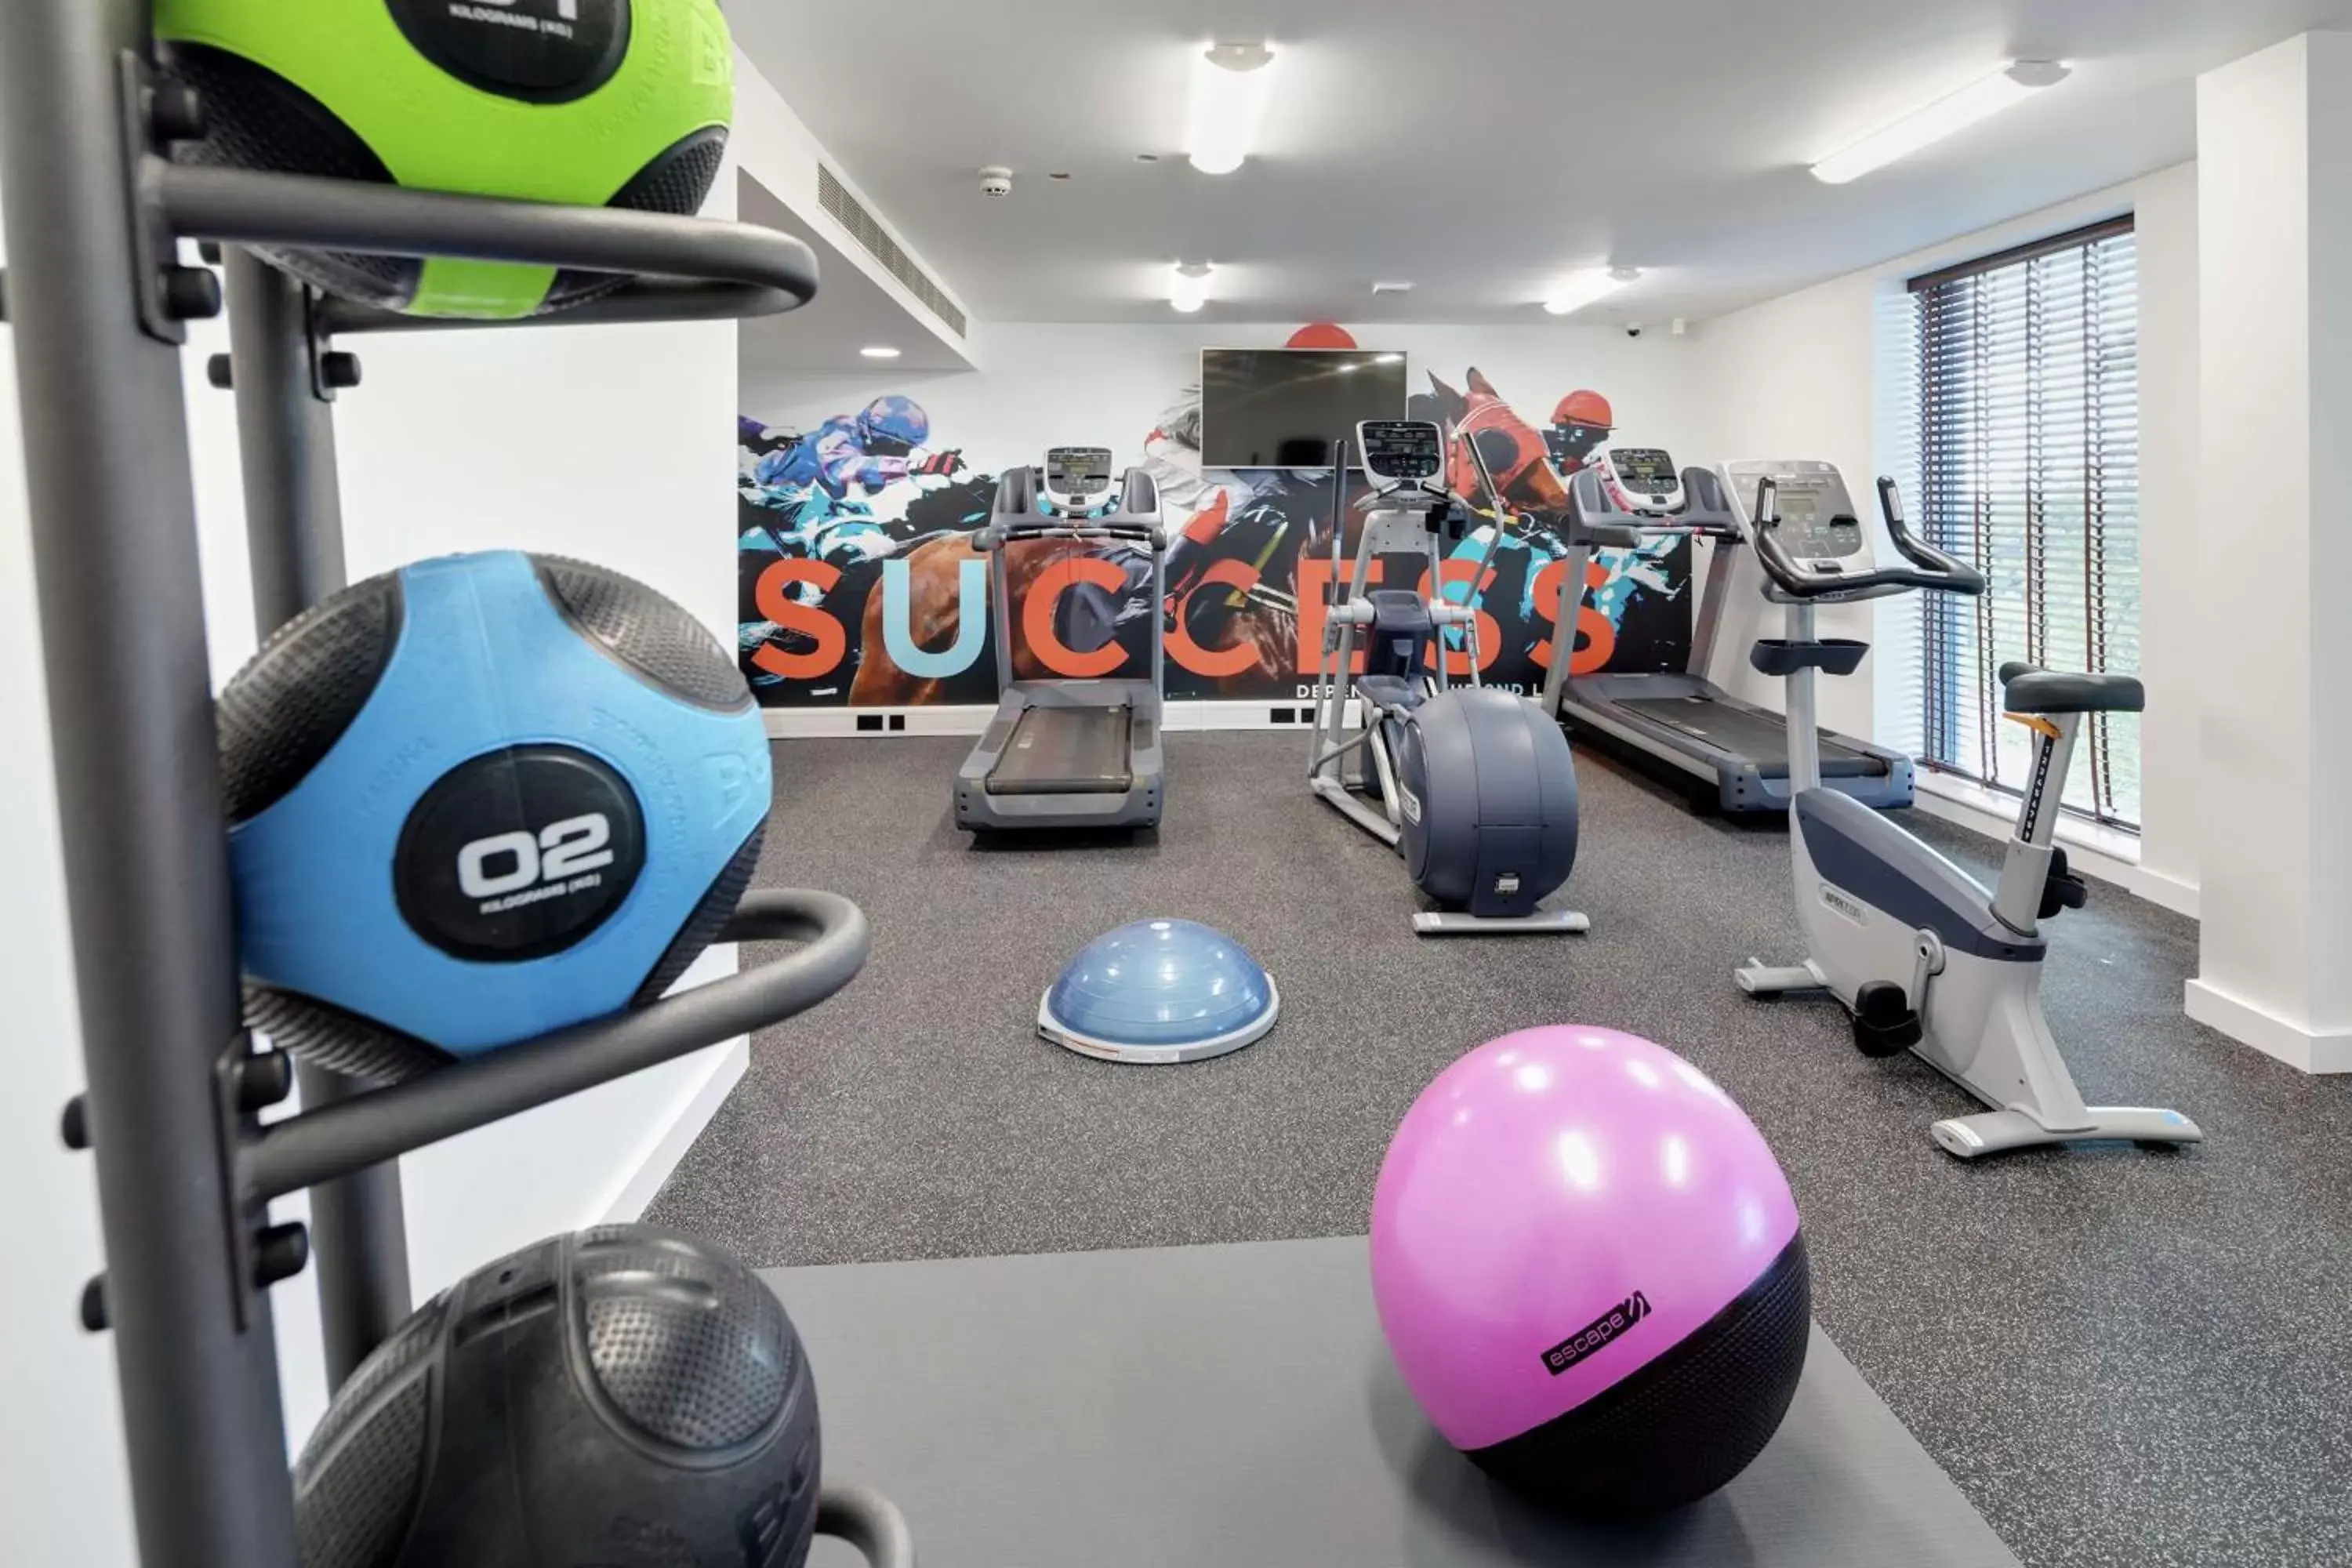 Fitness centre/facilities, Fitness Center/Facilities in Hilton Garden Inn Doncaster Racecourse